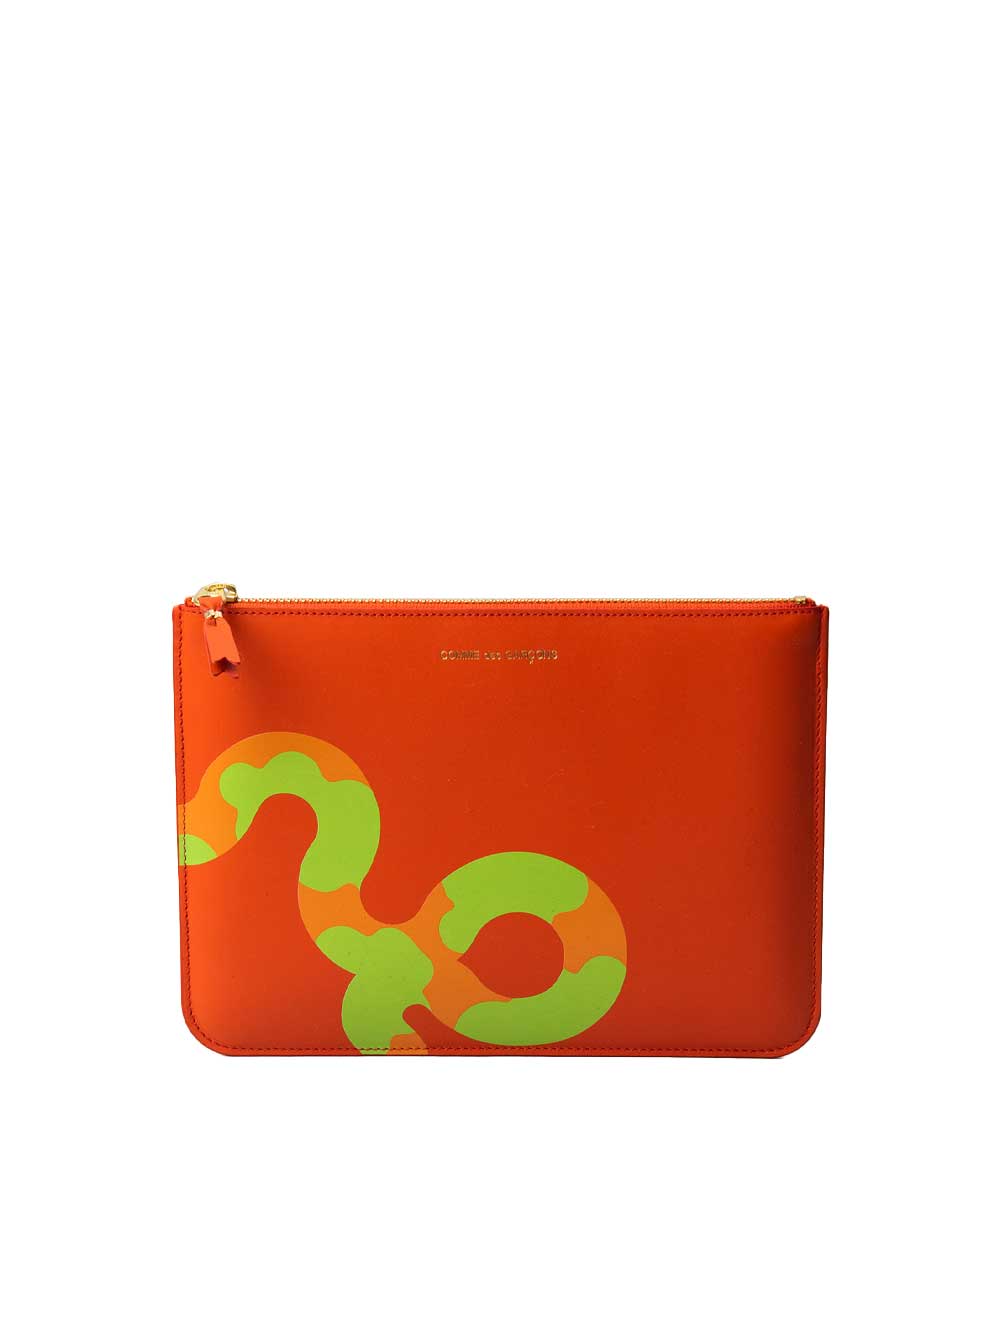 Clutch Bag In Orange Special Edition